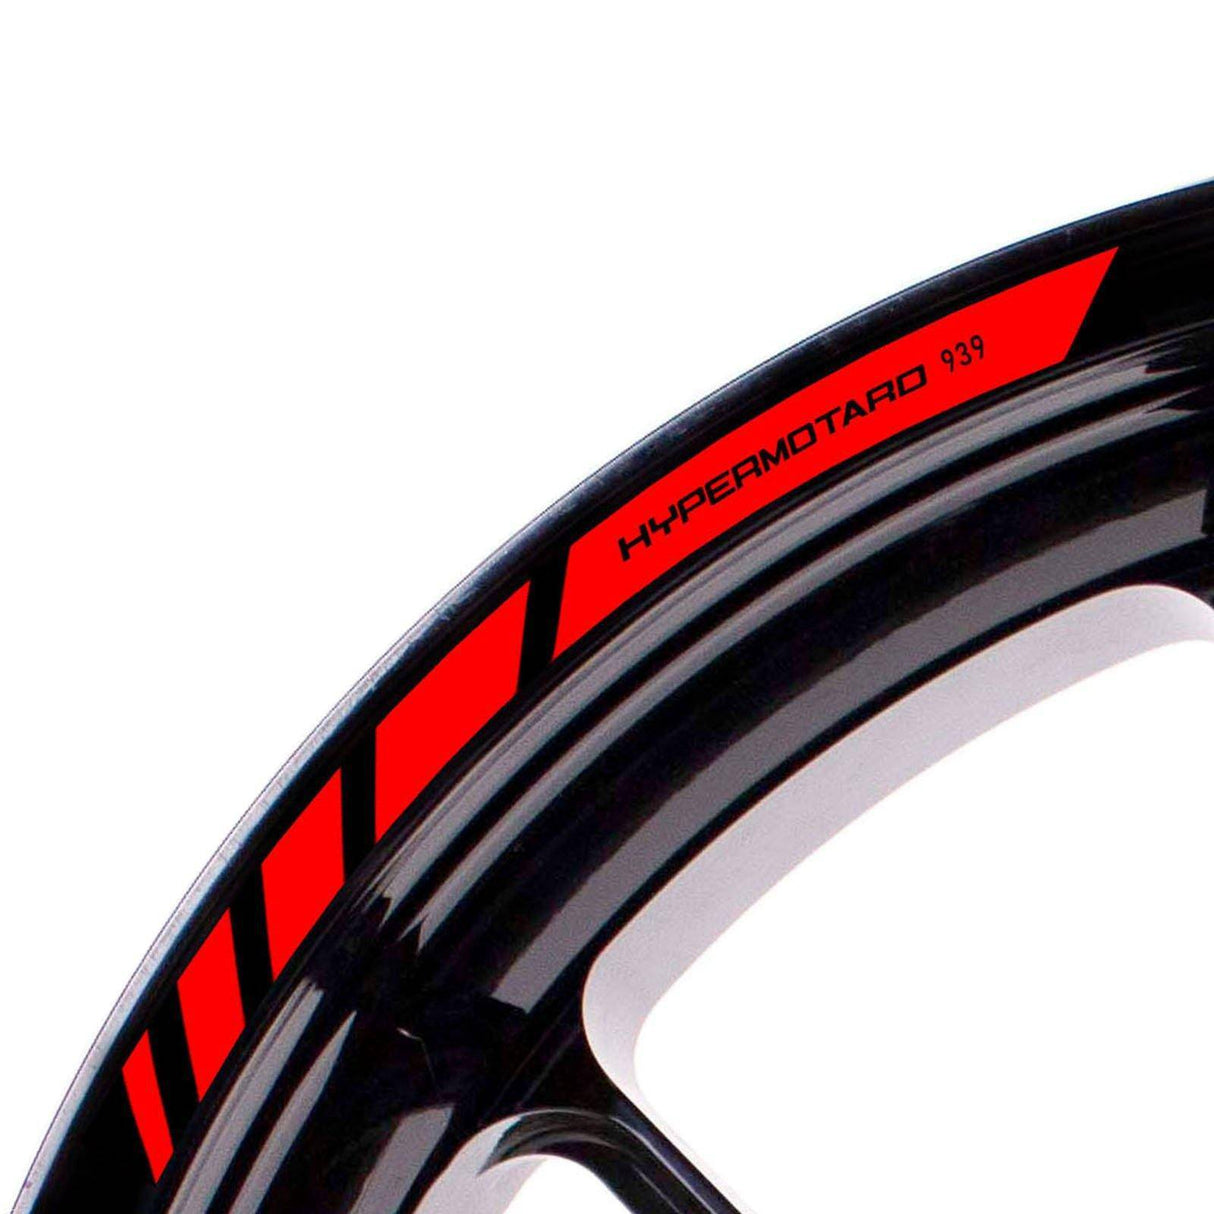 For Ducati Hypermotard 939 Logo 17 inch Rim Wheel Stickers MM01B Rim Edge Tapes.